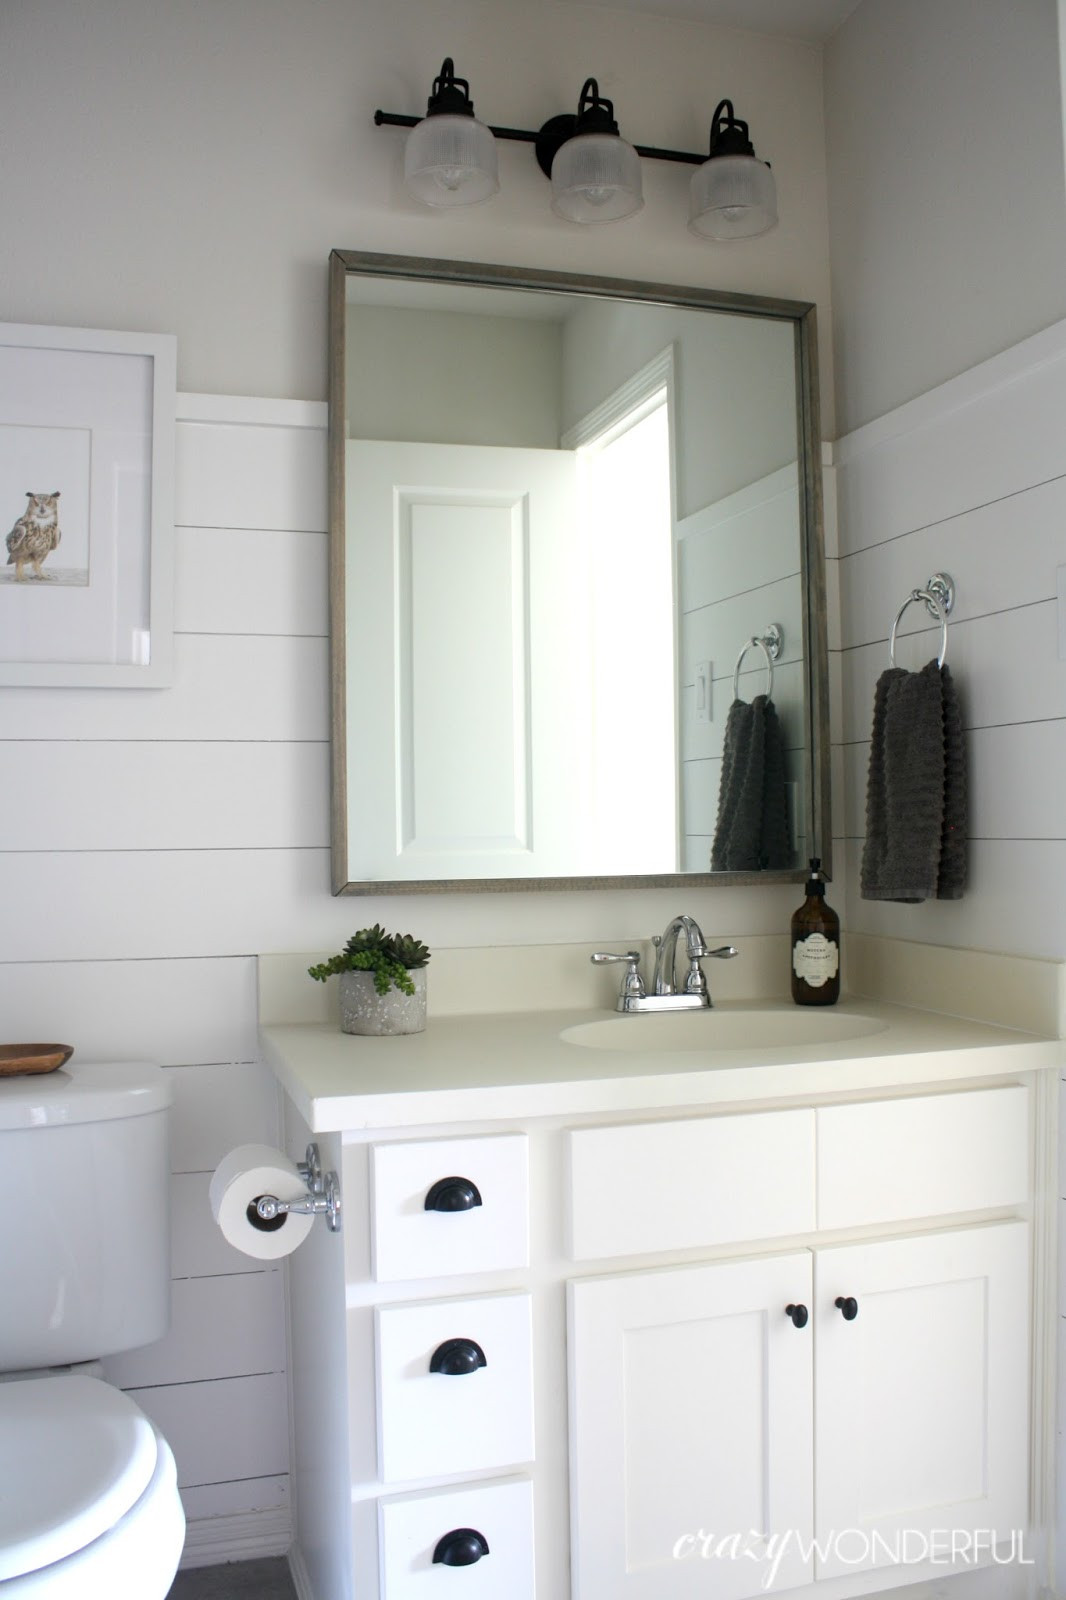 Best ideas about Shiplap In Bathroom
. Save or Pin shiplap boy s bathroom reveal Crazy Wonderful Now.